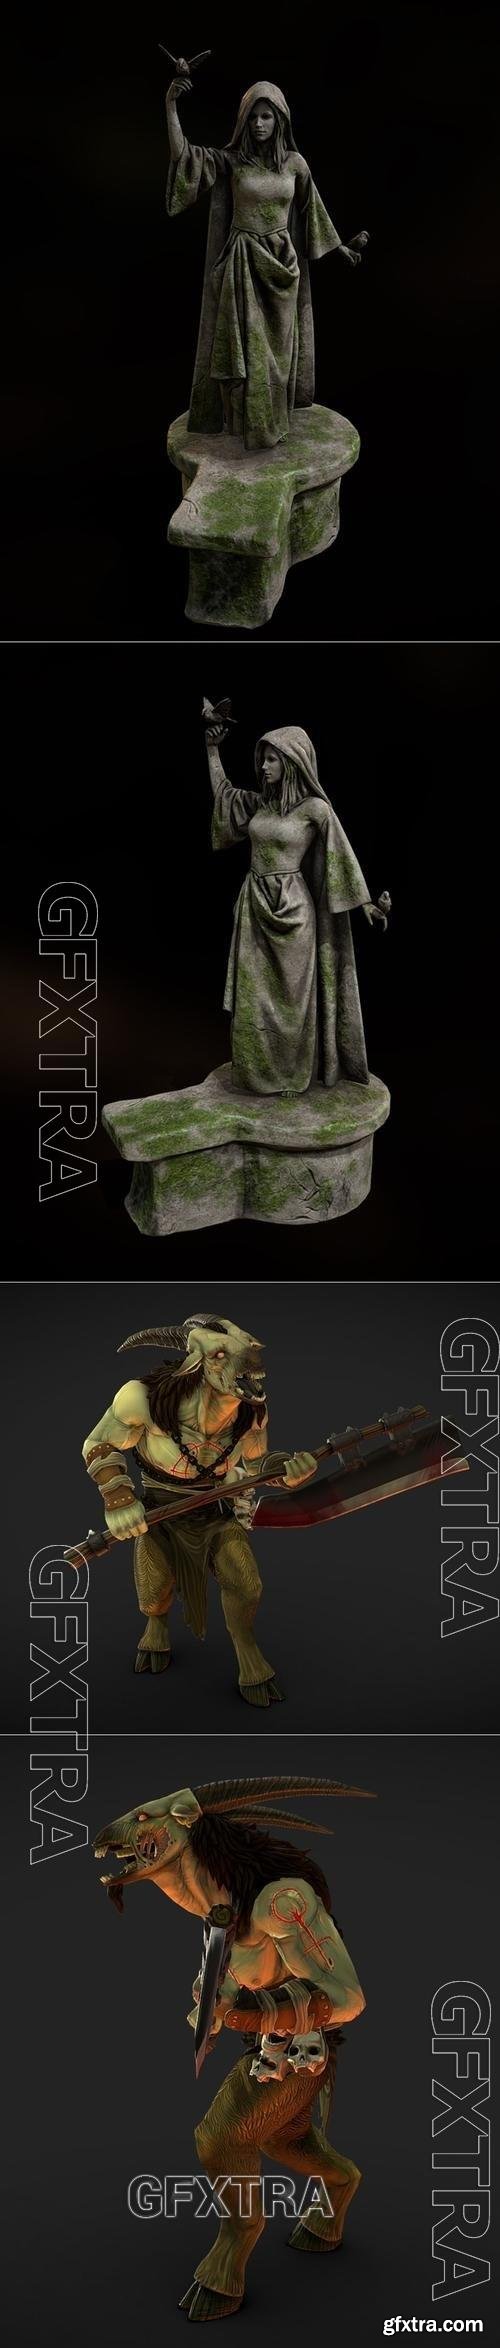 Shrine of Nocturnal and Khazra Goatman Diablo IV fan art 3D